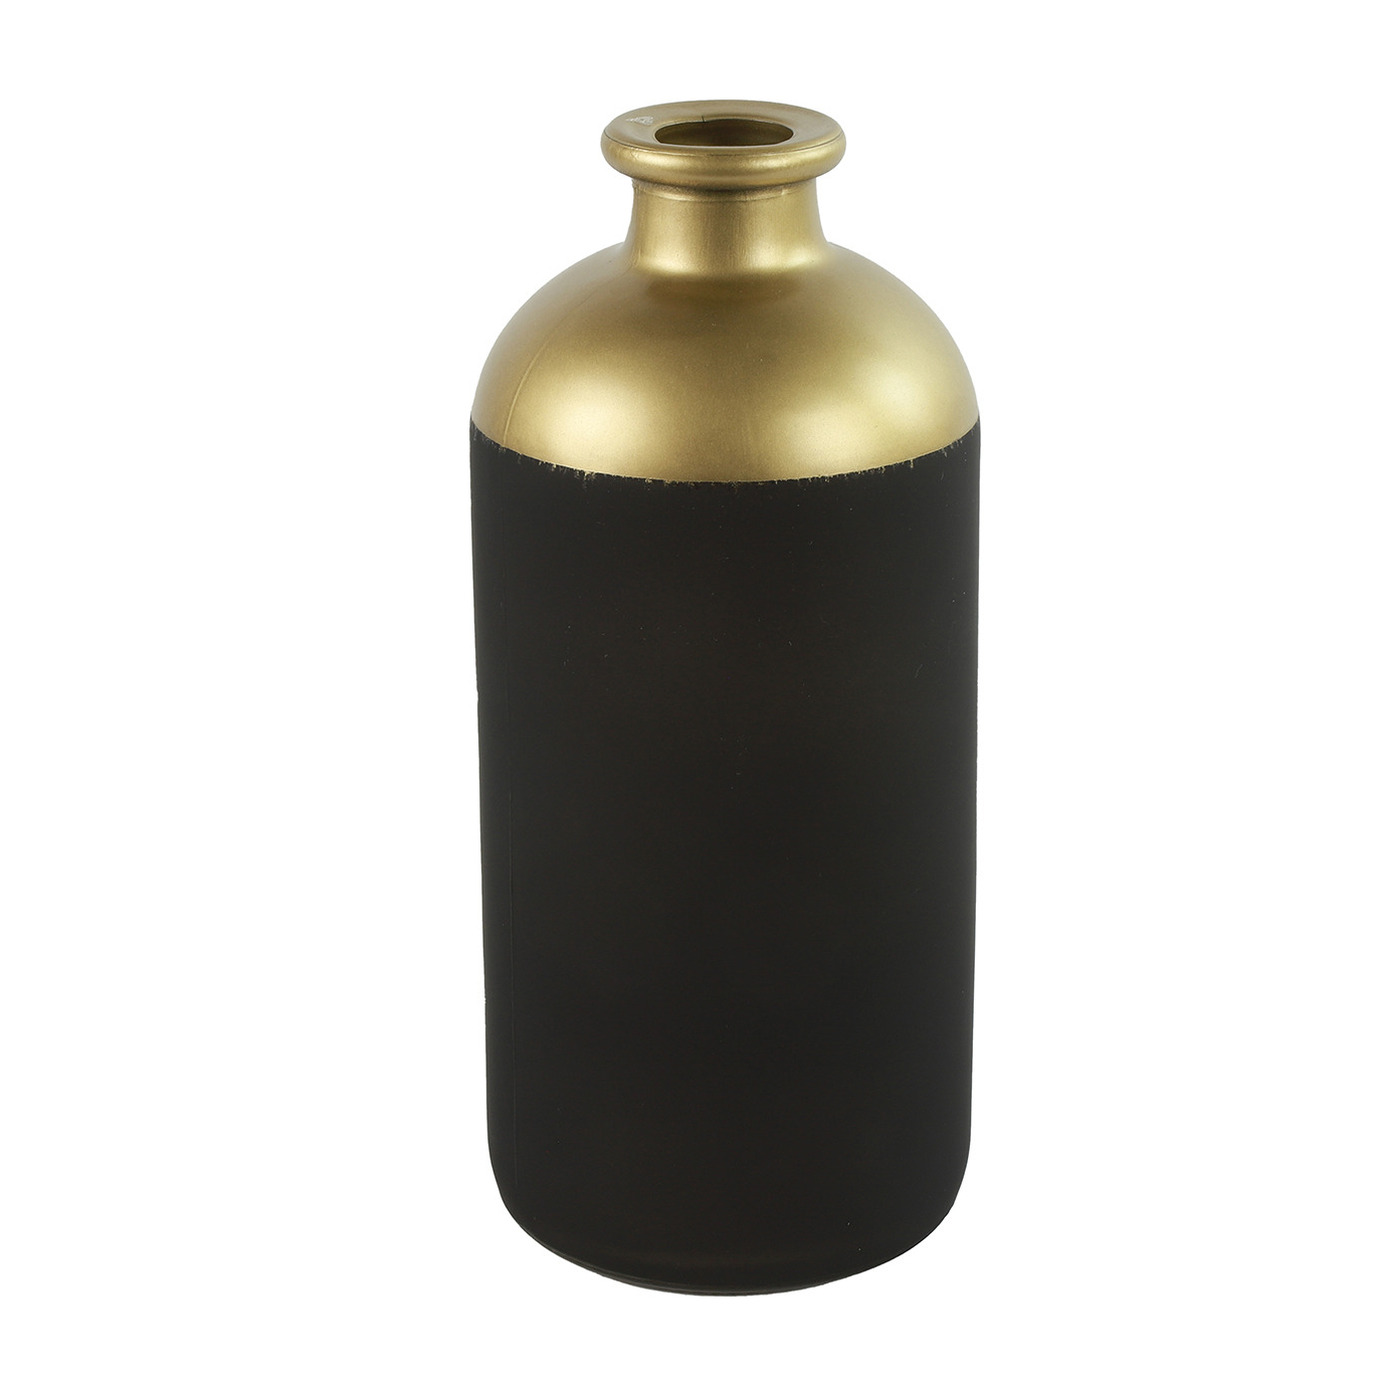 Countryfield Bloemen-deco vaas zwart-goud glas fles D11 x H25 cm